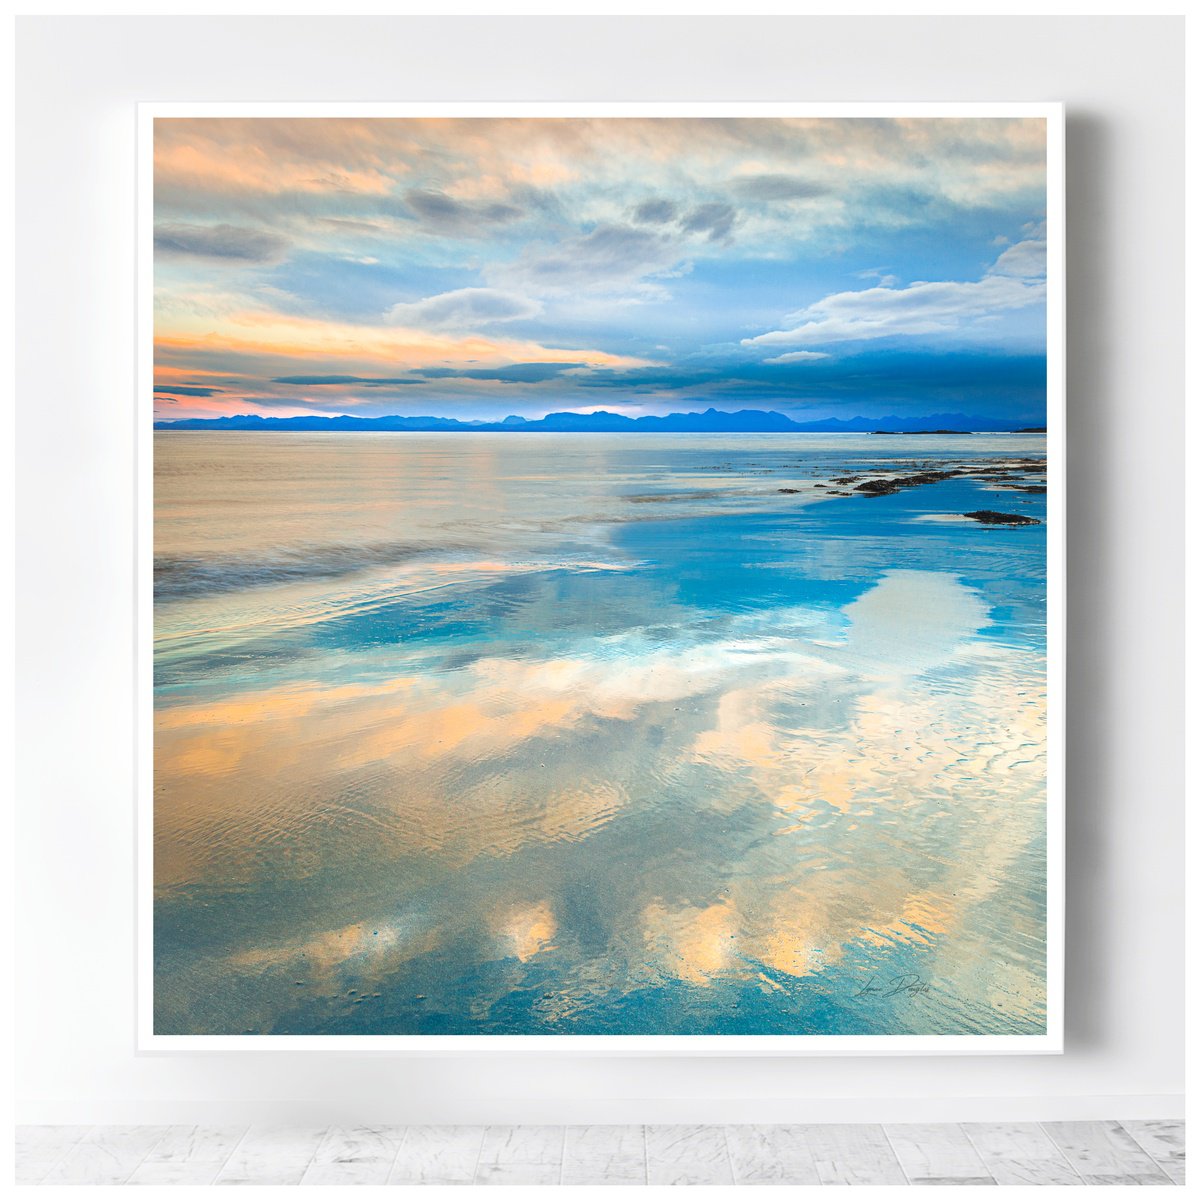 Impressionist Seascape - Reflecting on Blue by Lynne Douglas